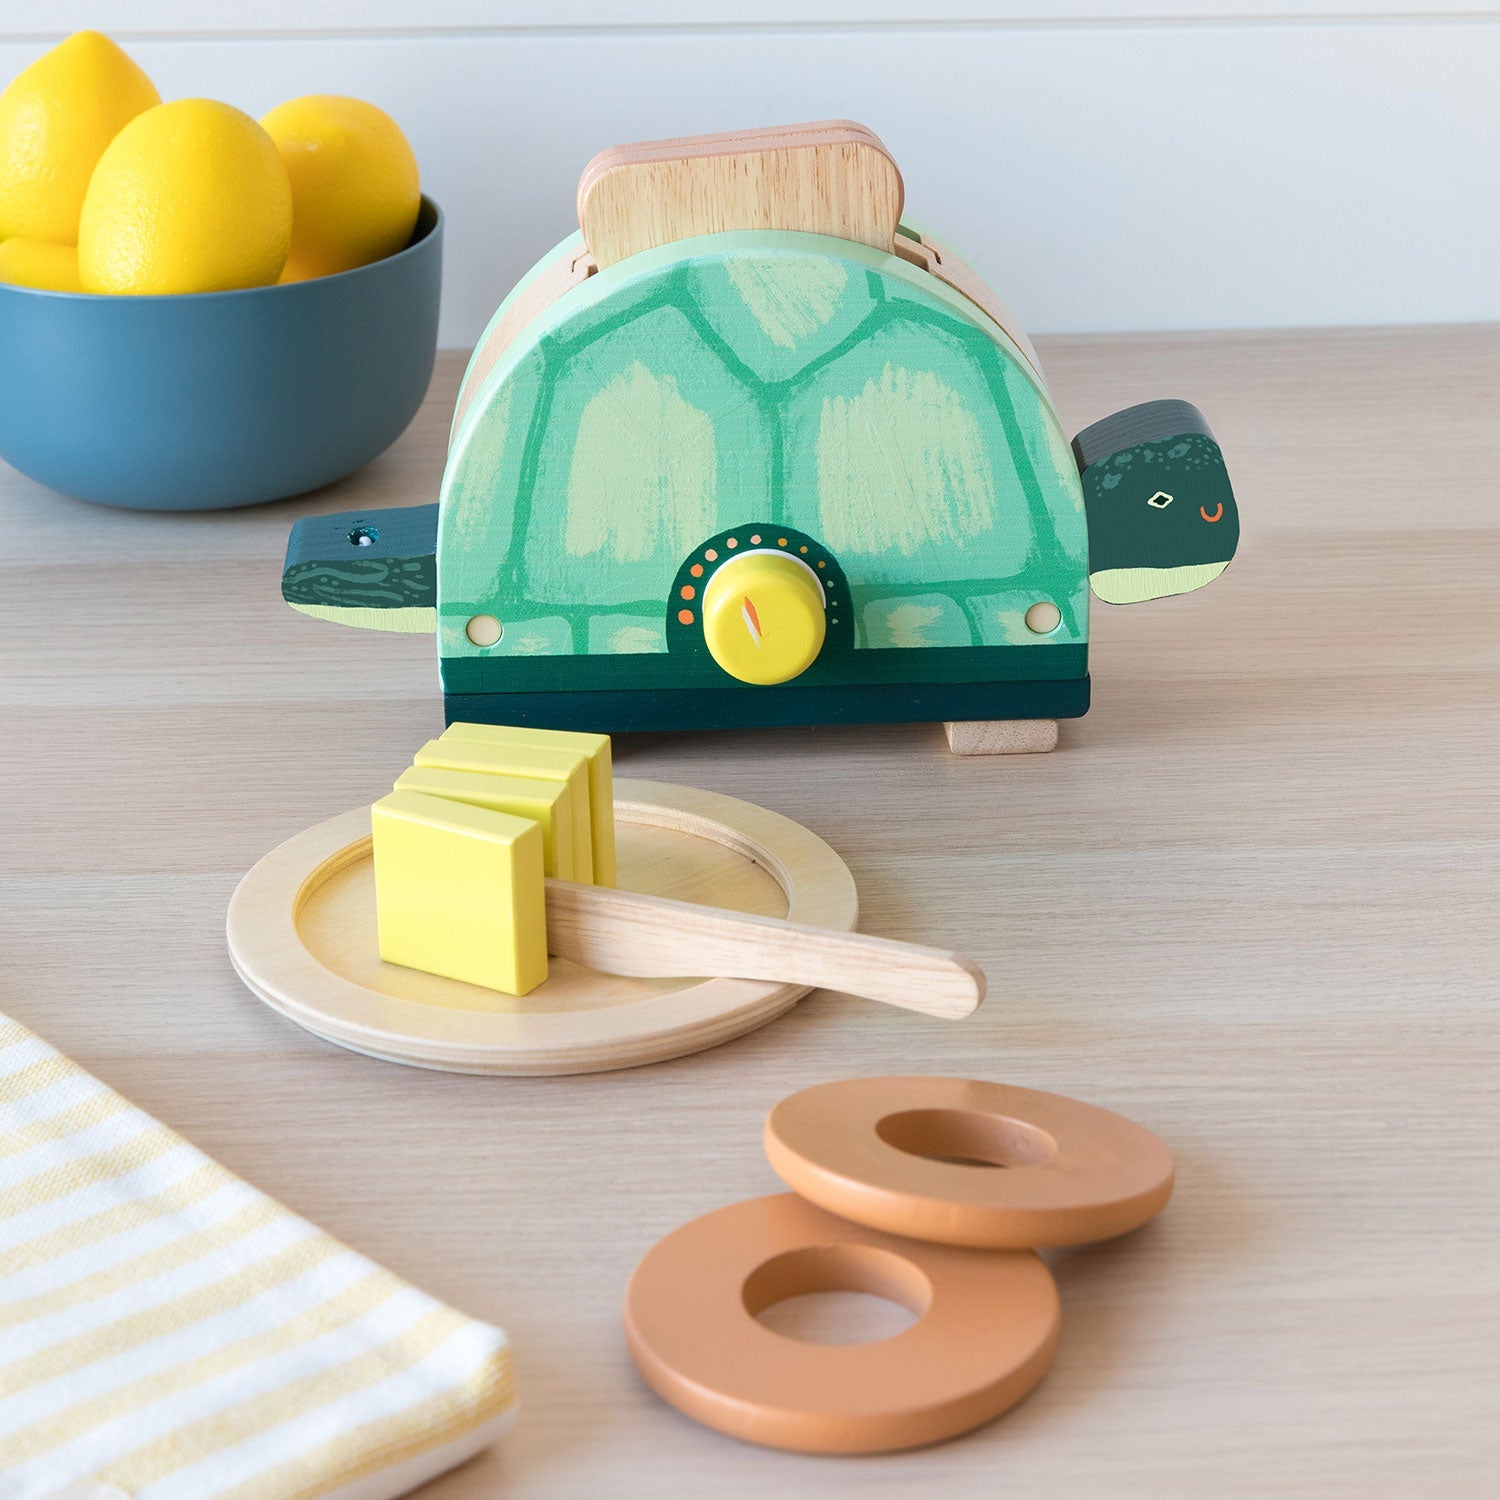 Manhattan Toy Toasty Turtle Play Food